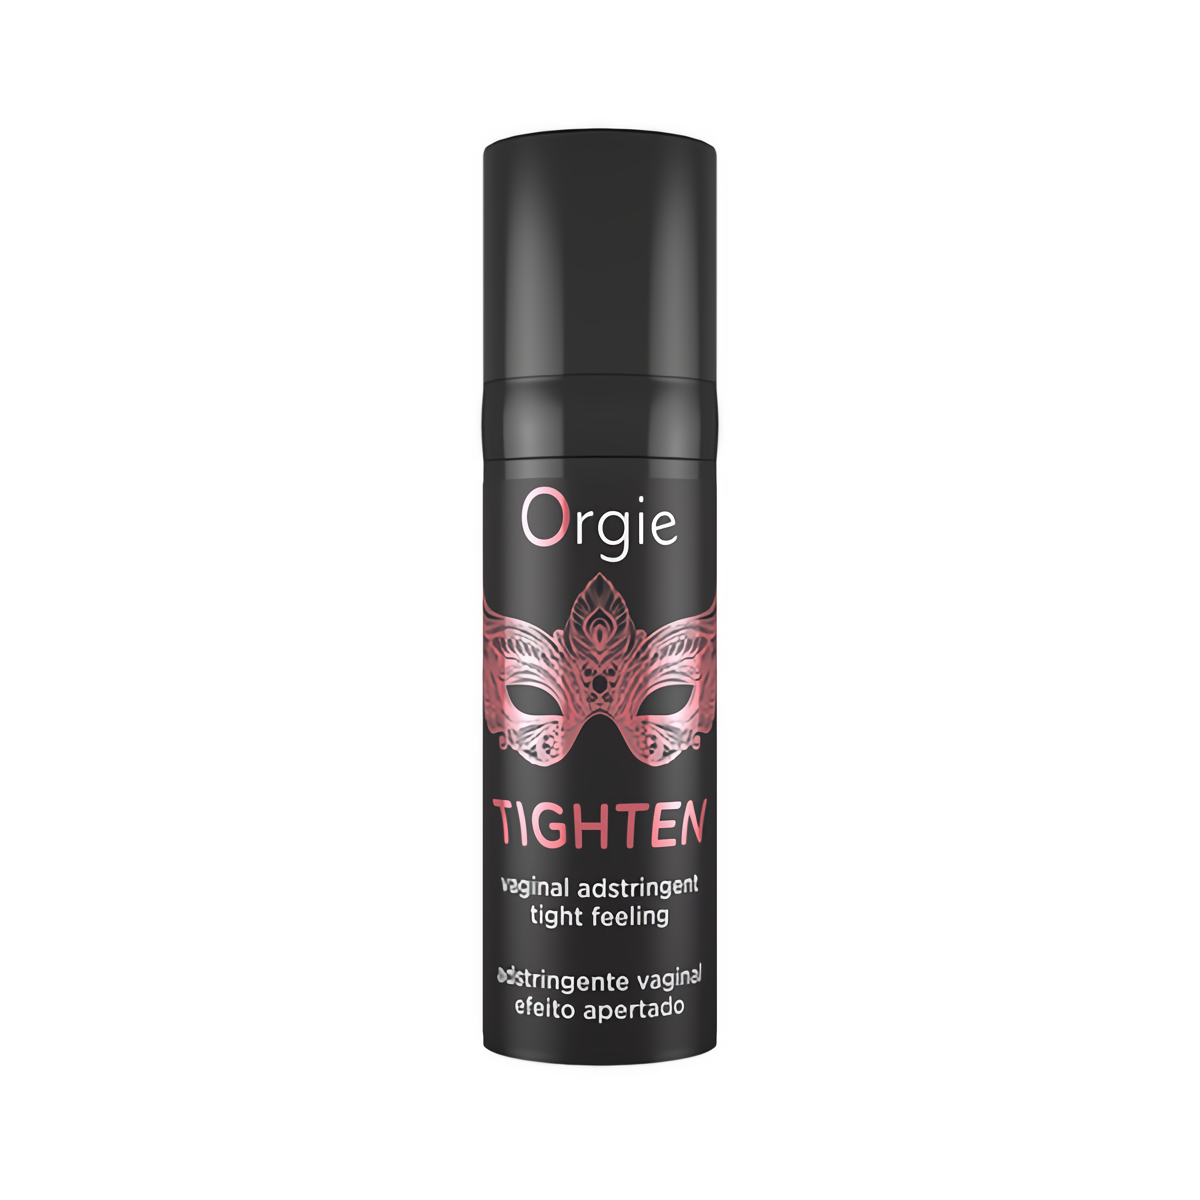 Tighten - Tightening gel